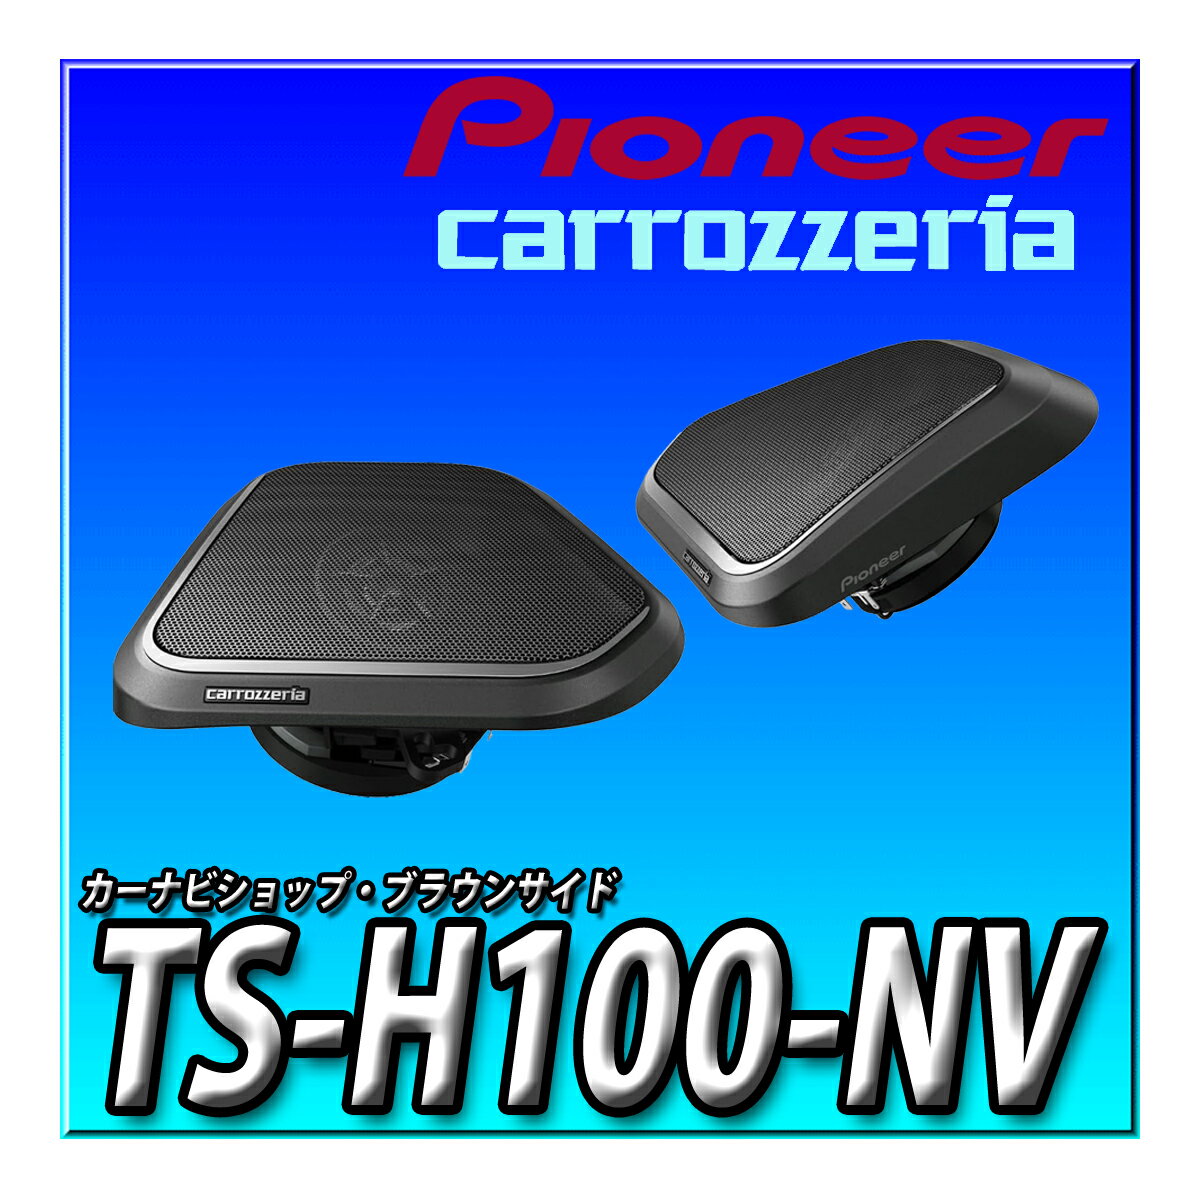 pioneer ԡ ts-h100-nvβ